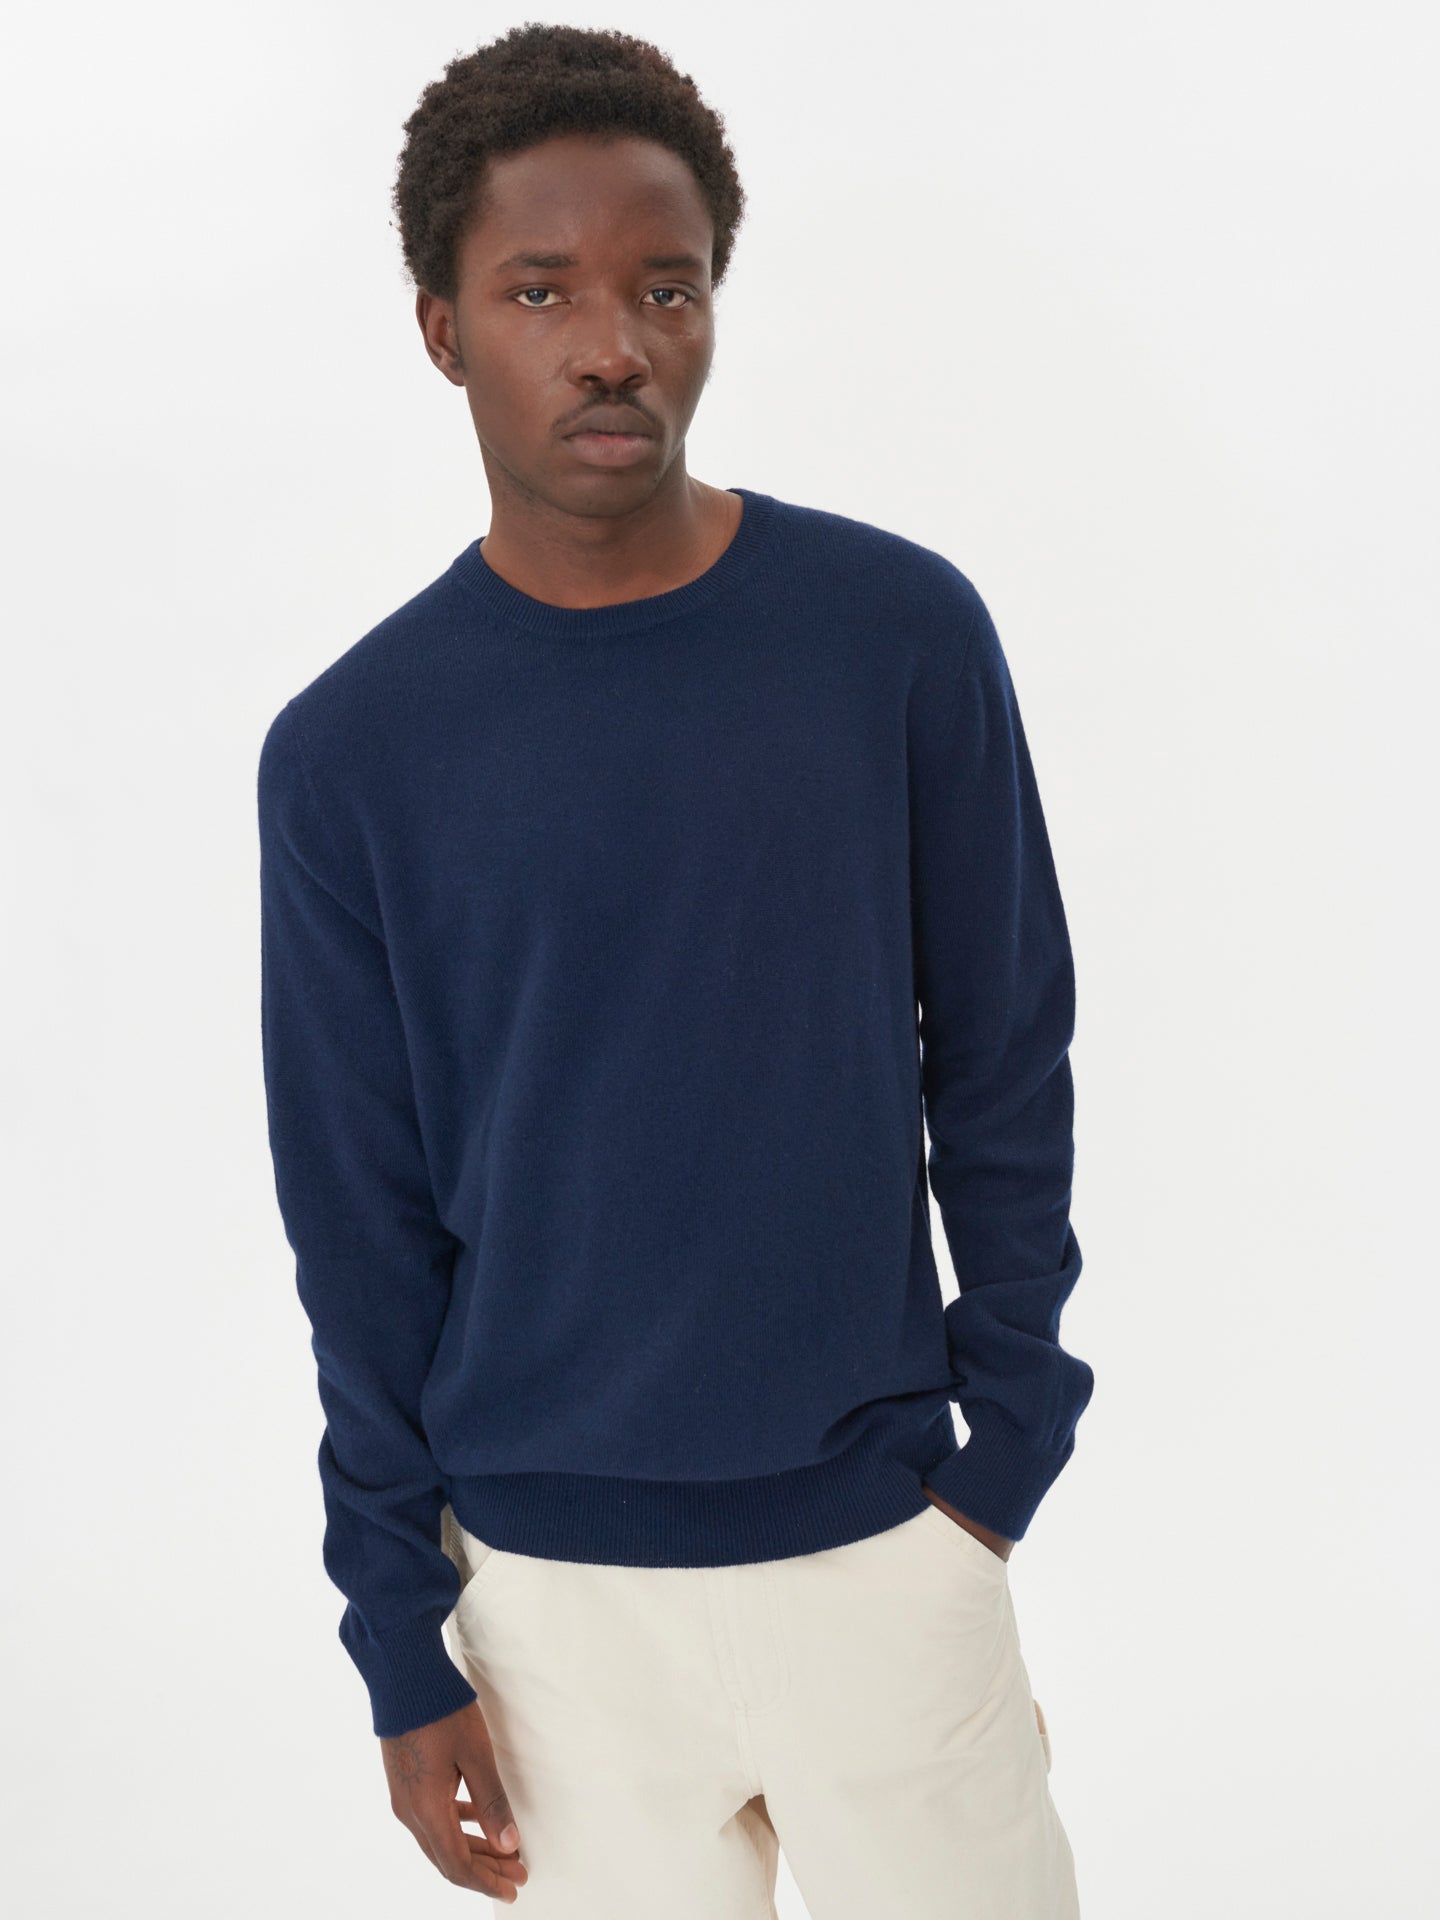 Men's Cashmere Basic Turtle Neck Sweater Black - Gobi Cashmere